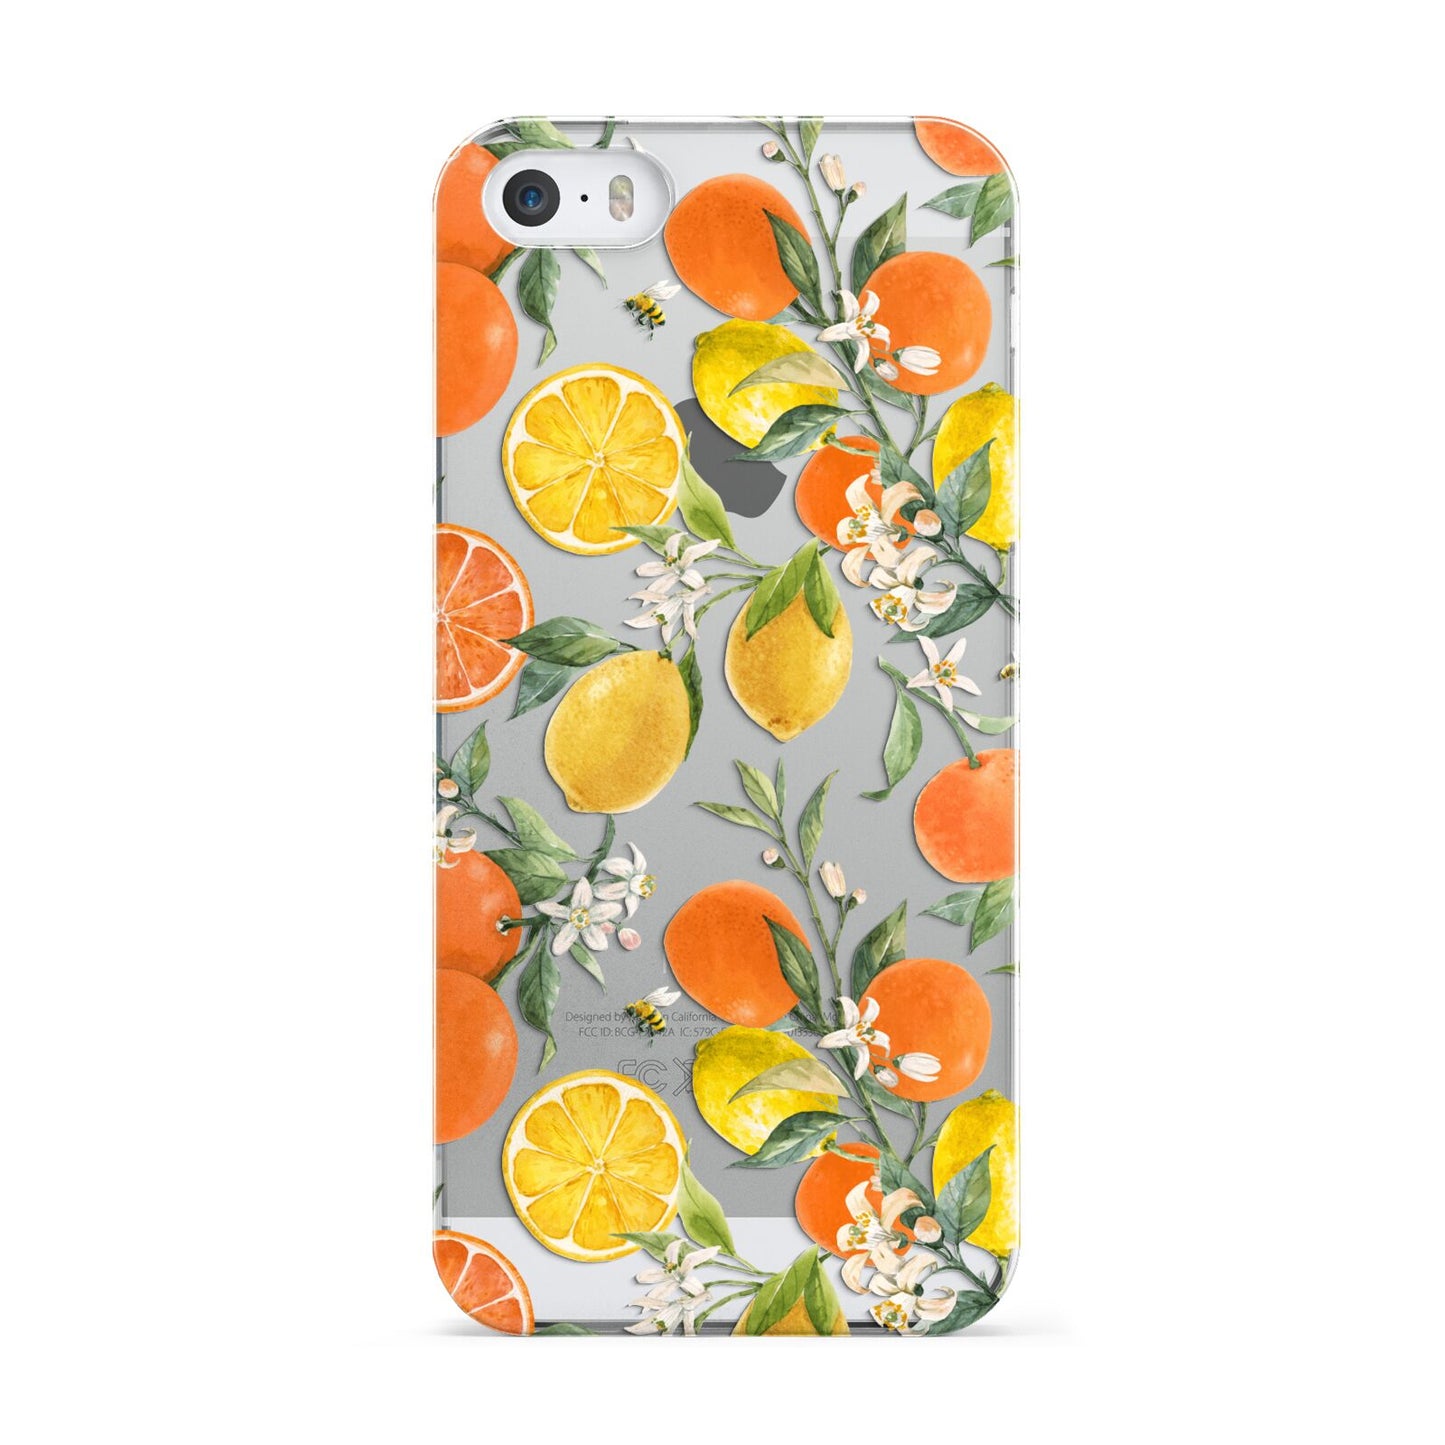 Lemons and Oranges Apple iPhone 5 Case